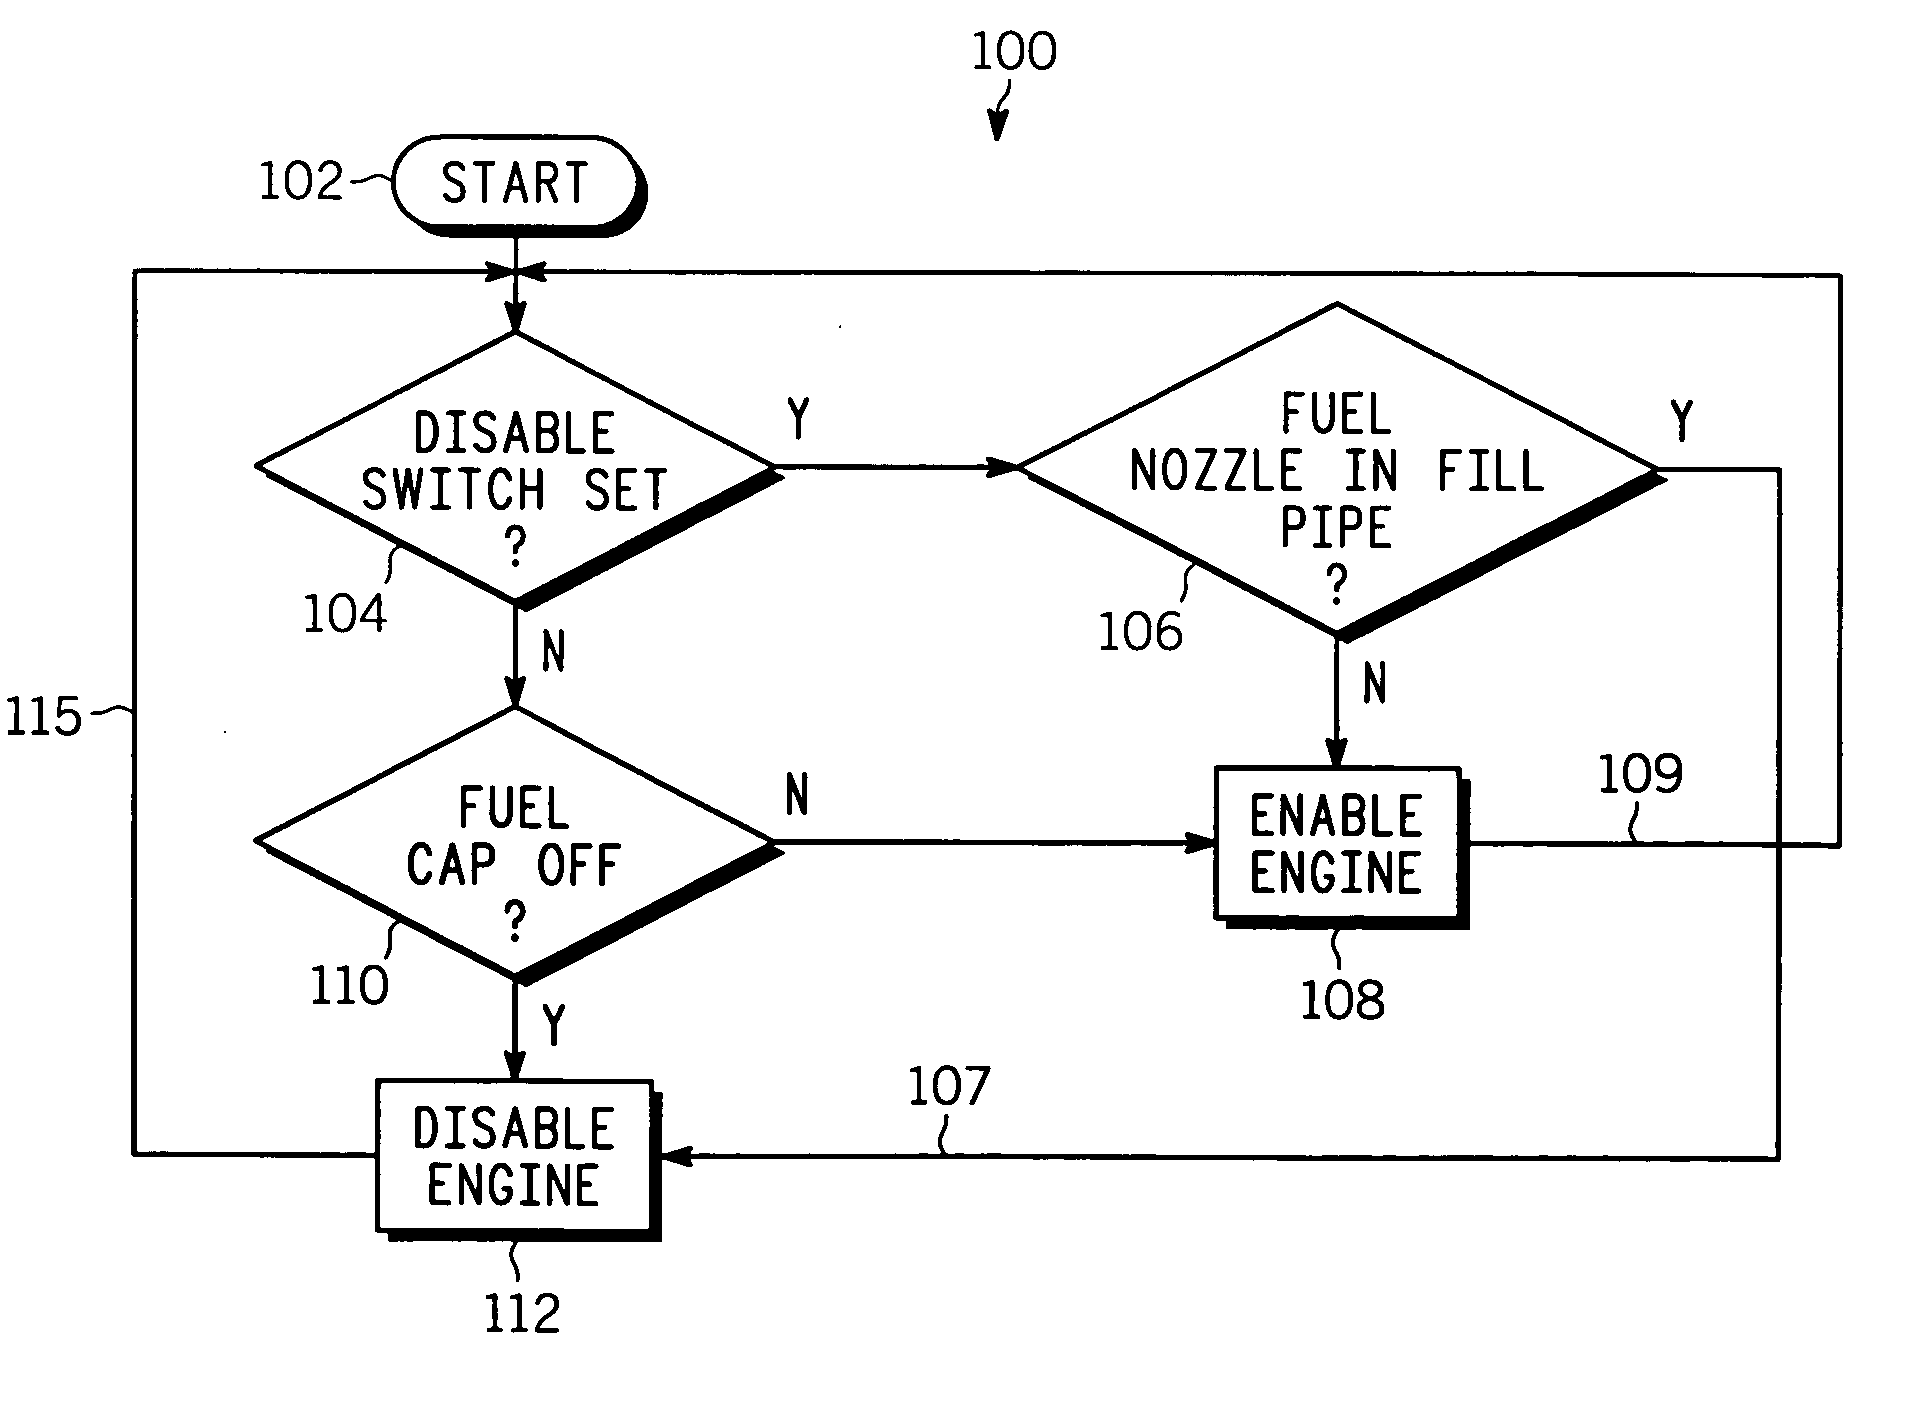 Vehicle fueling arrangement